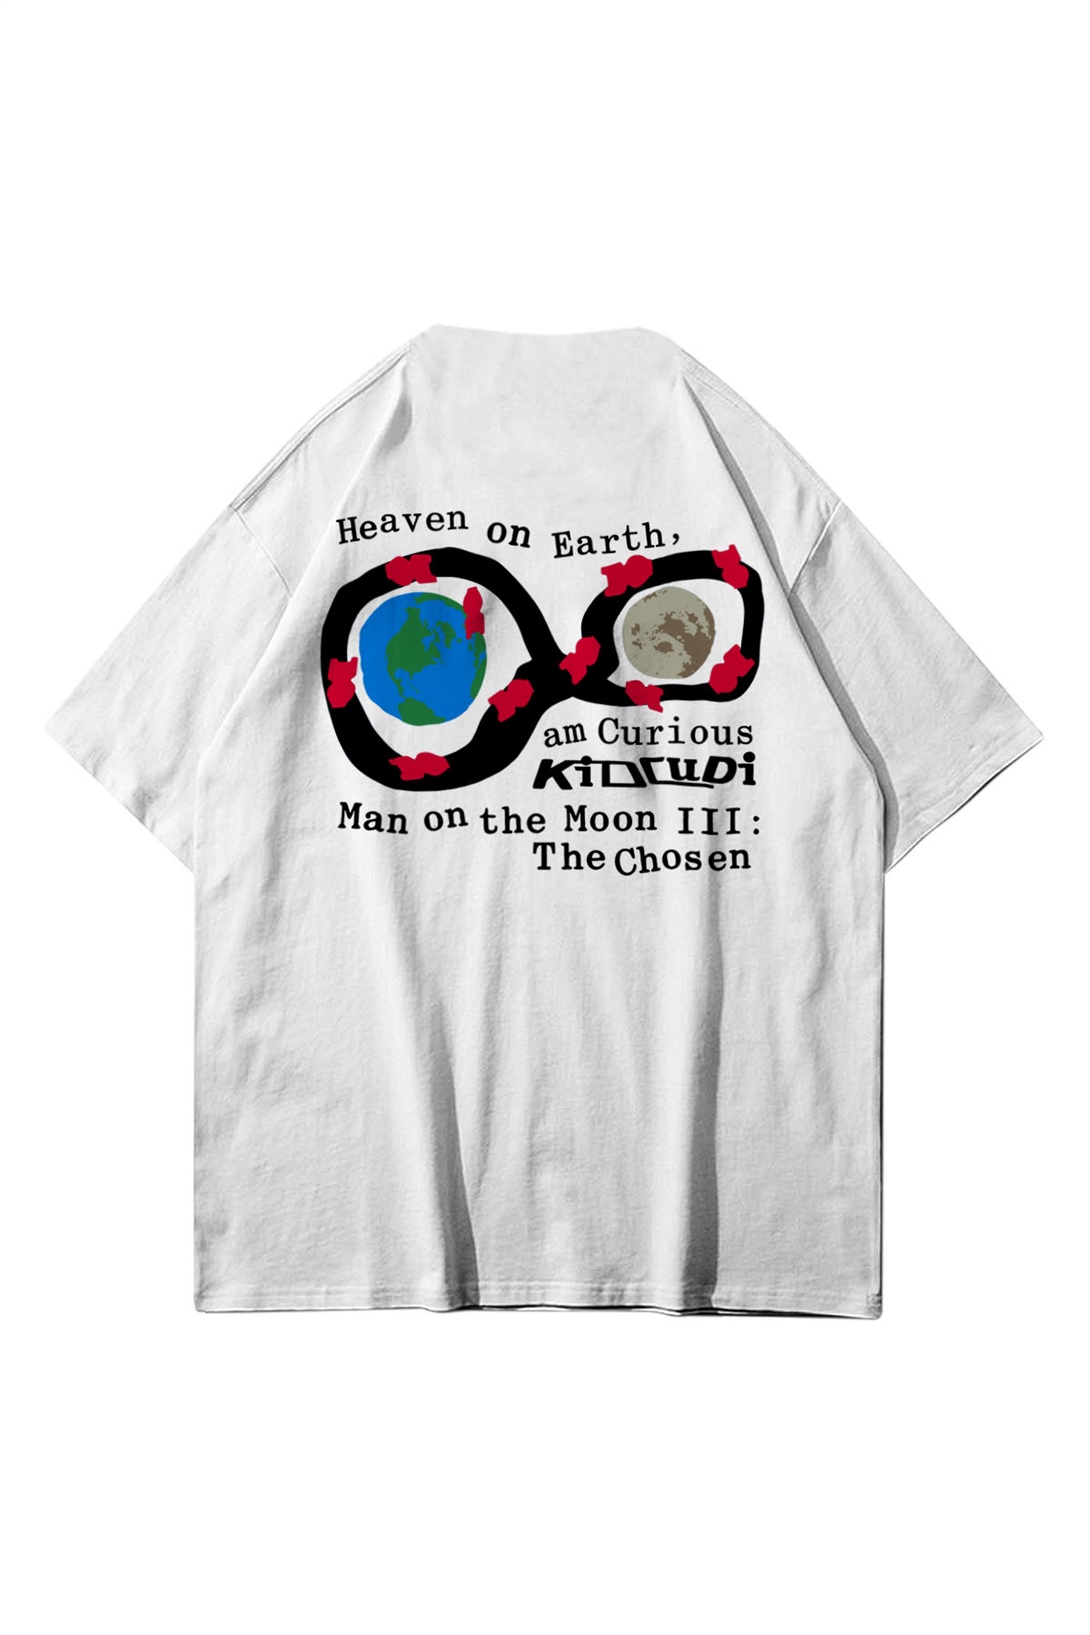 Trendiz Unisex Man on the Moon 3 Kid Cudi Beyaz Tshirt